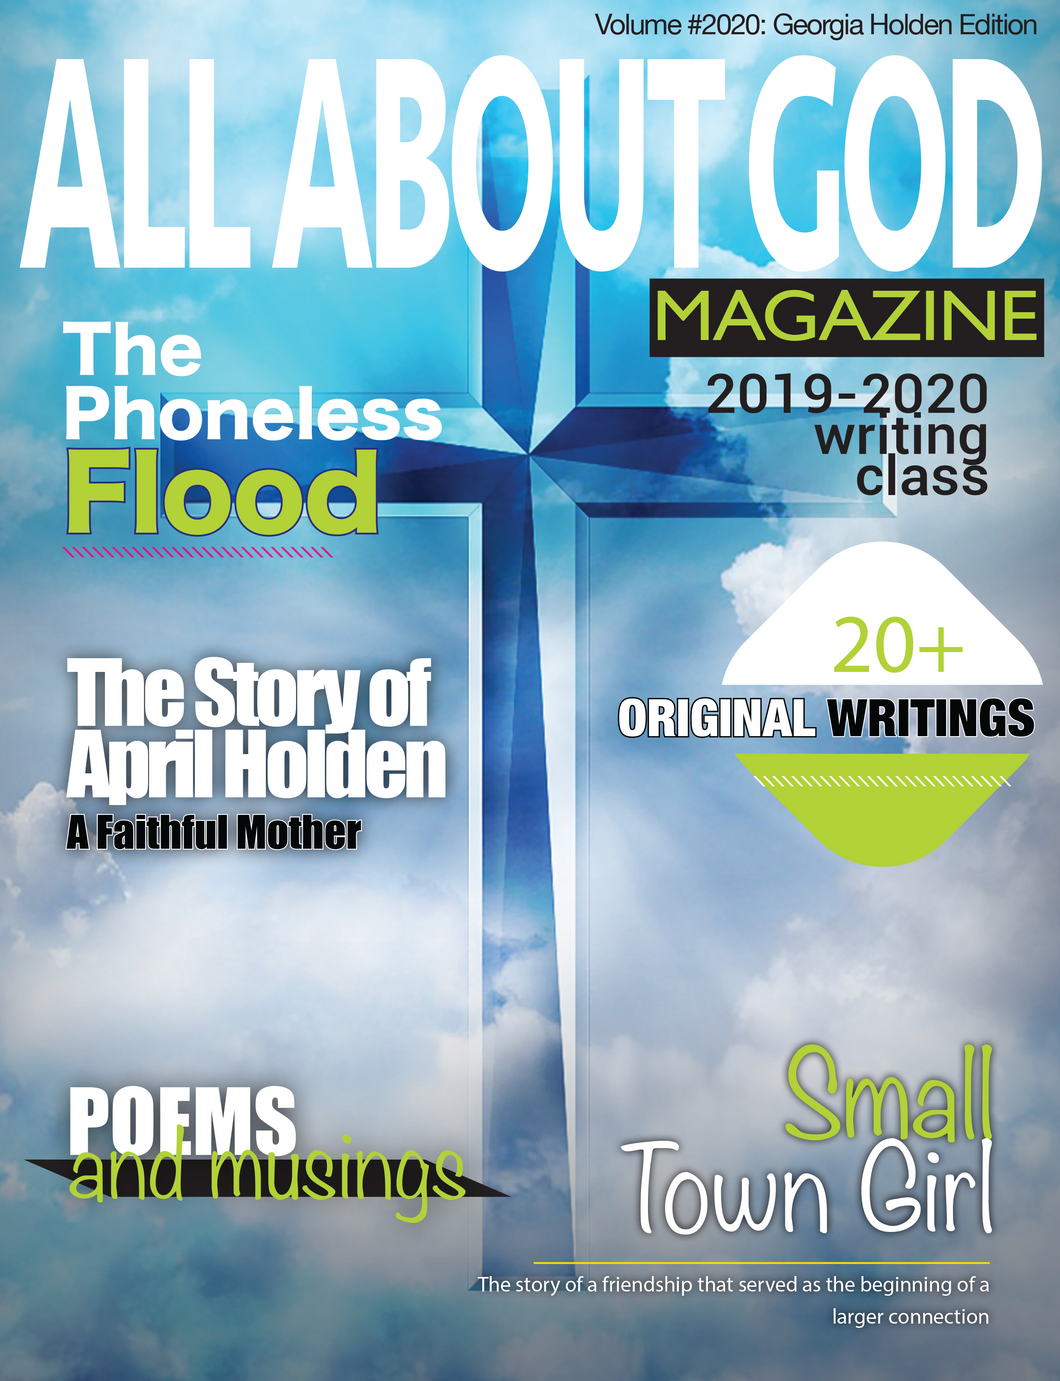 All About God Magazine: Volume #2020: Georgia Holden Edition